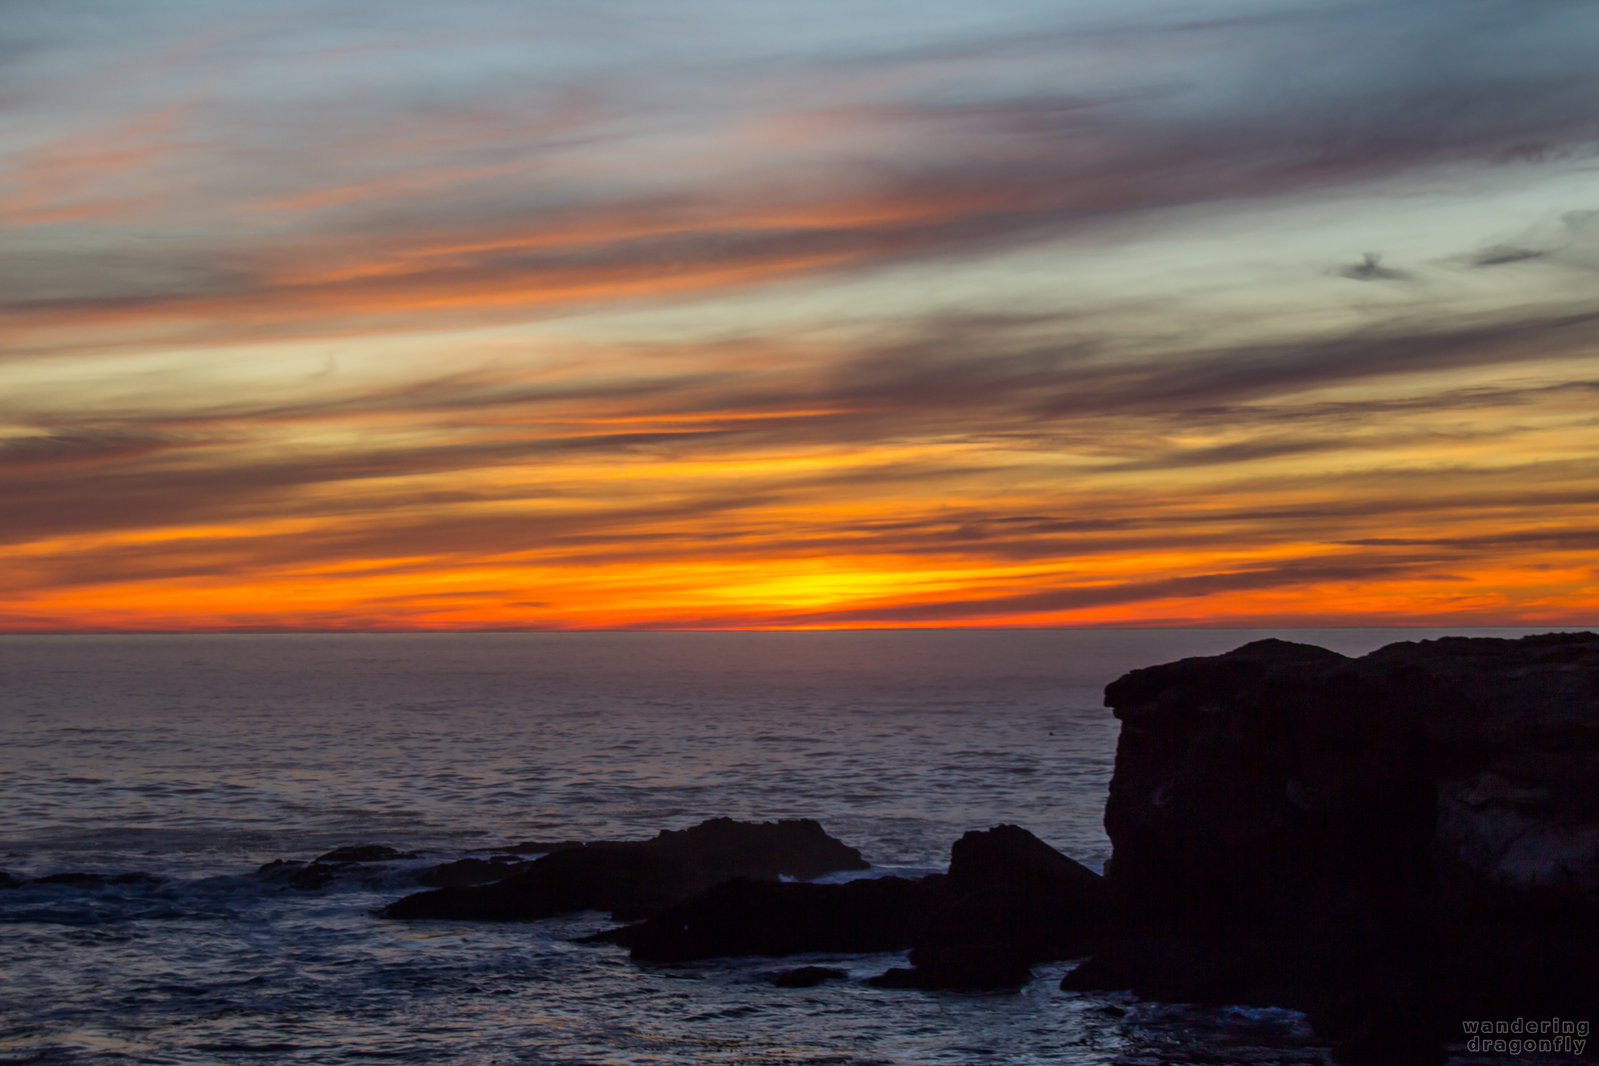 Amazing colors even after sunset -- cloud, ocean, rock, sun, sunset, water, wave